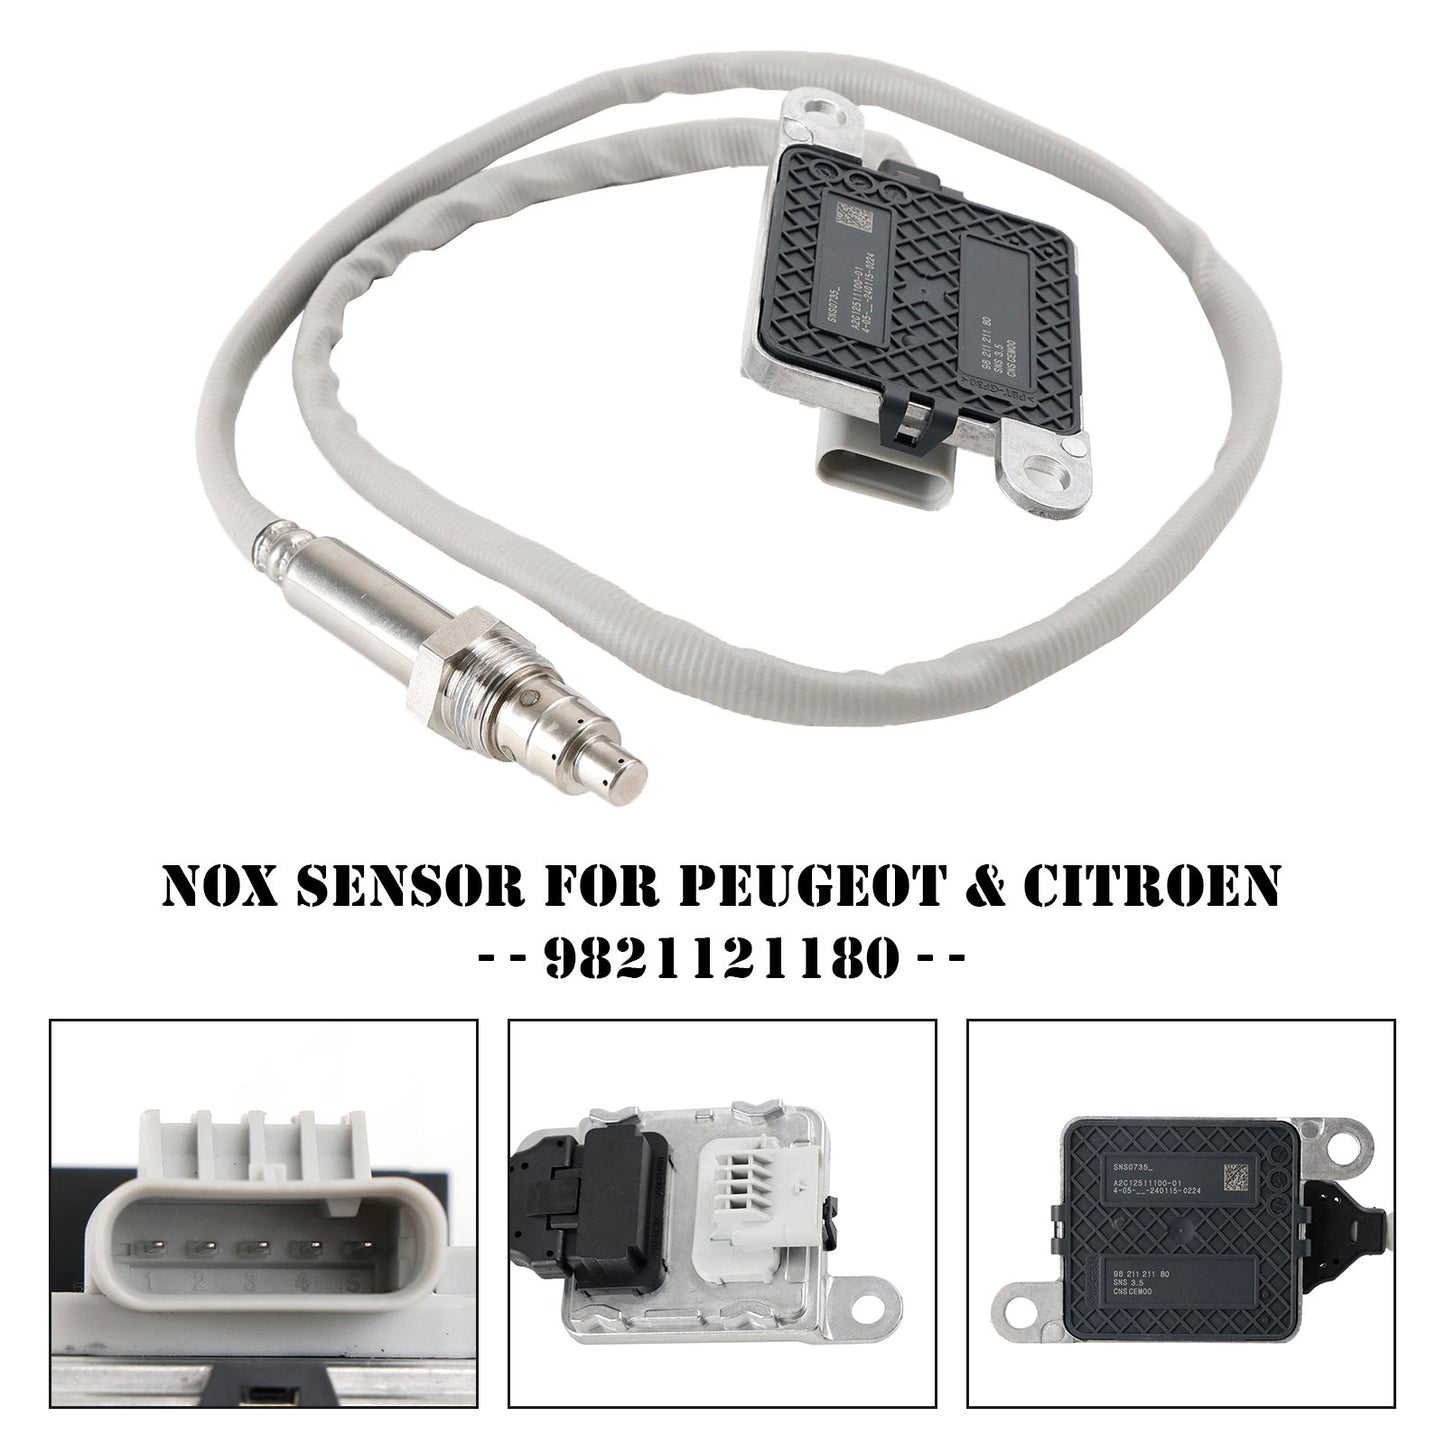 2009–2017 Peugeot 5008 2.0 HDi Nox-Sensor 9821121180